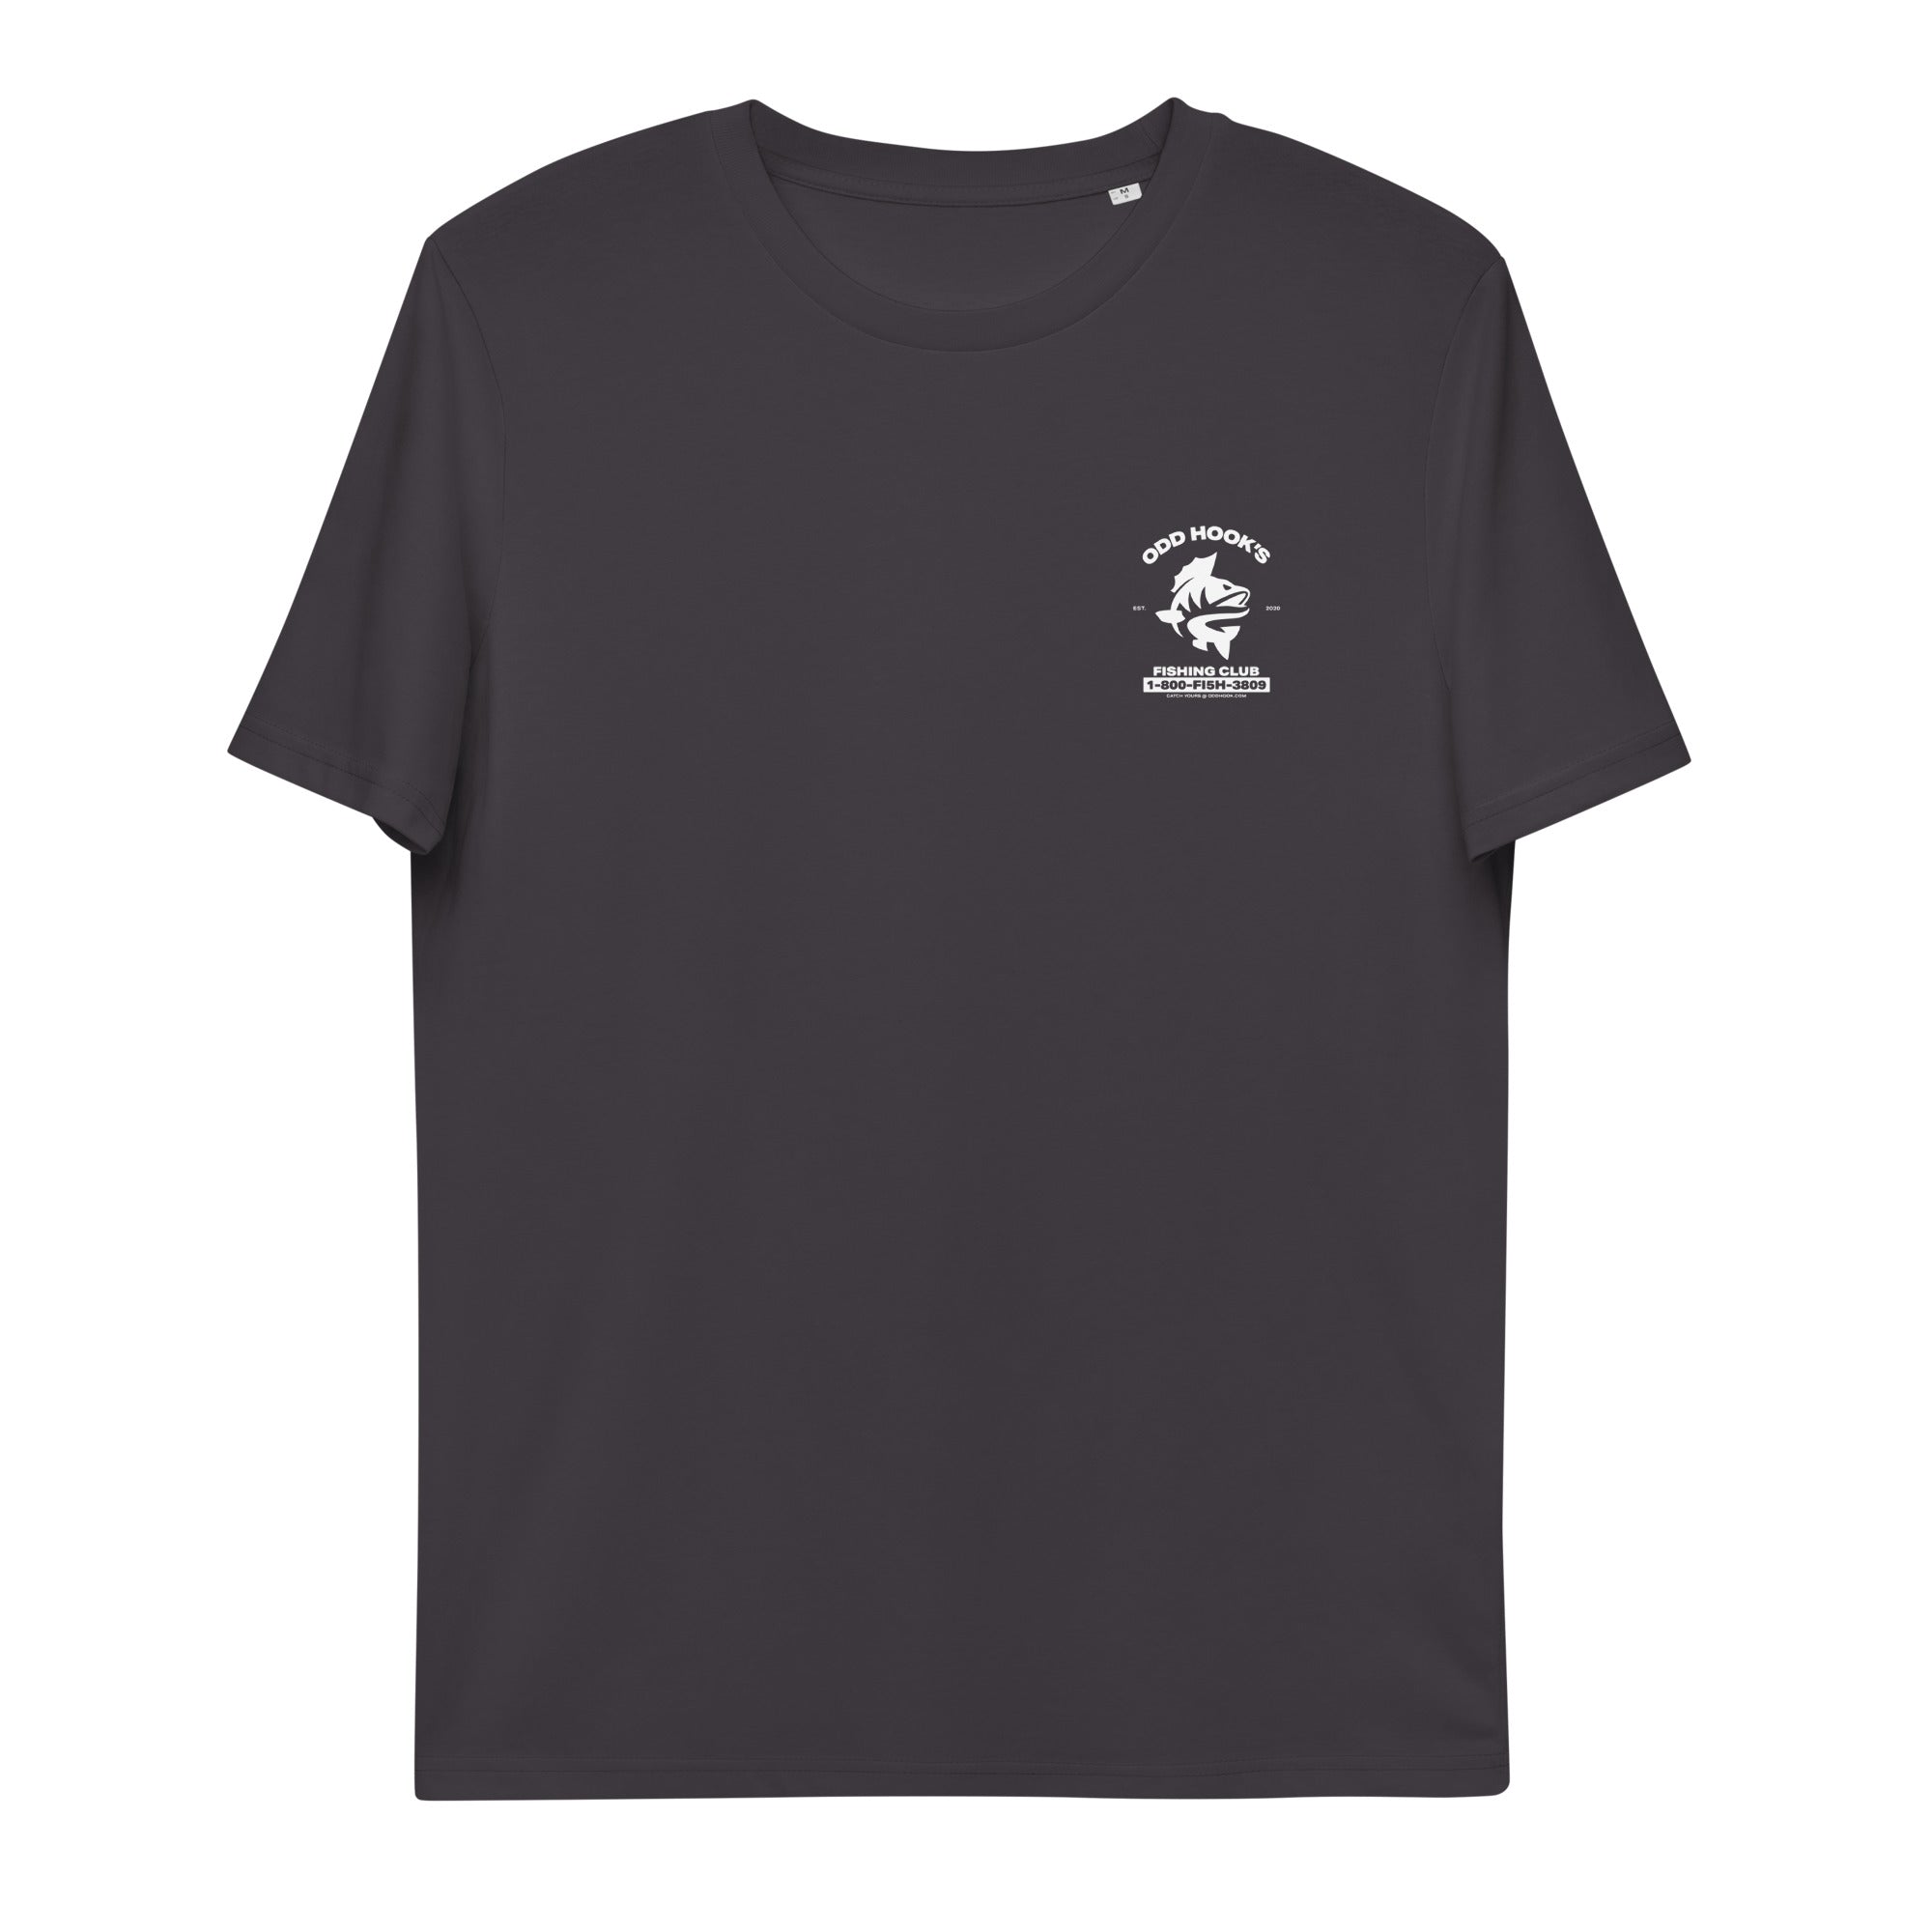 Perch Fishing Club T-shirt - Oddhook